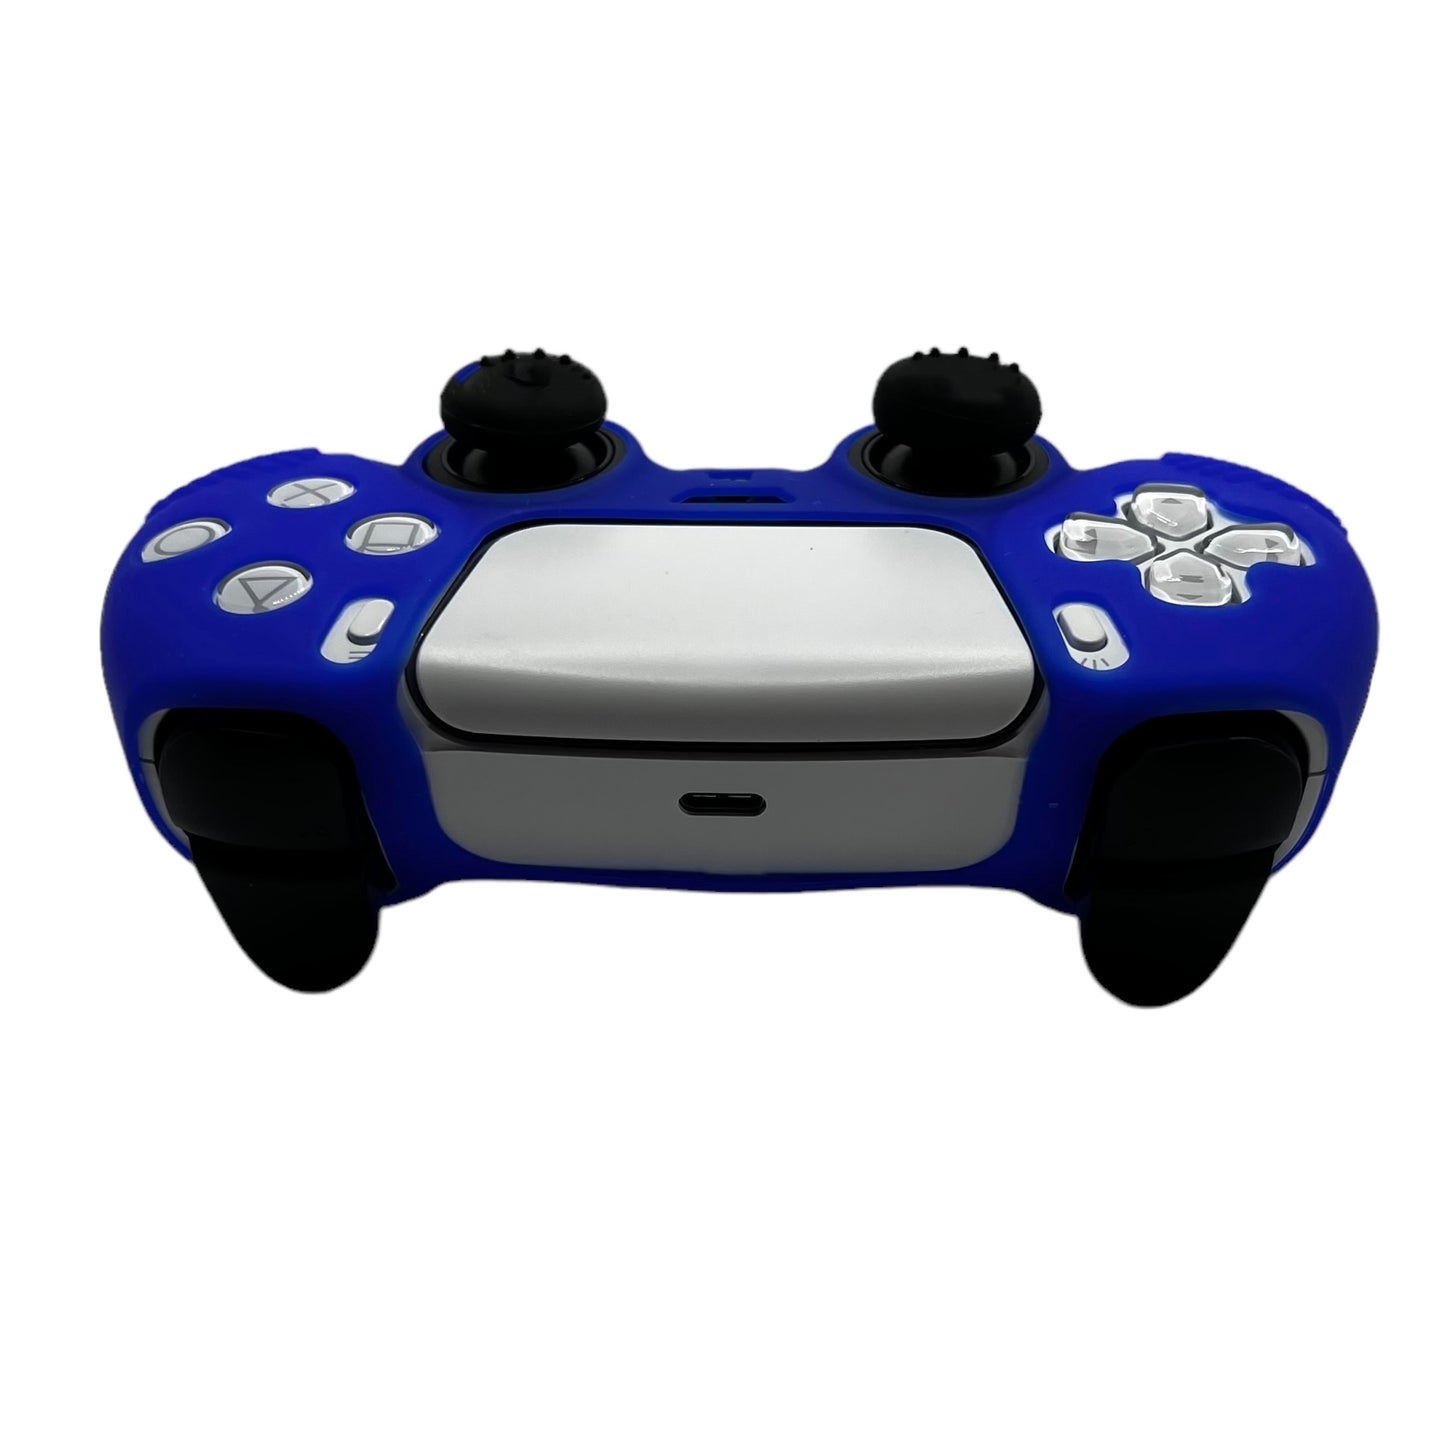 JenDore PS5 Controller Blue Anti-slip Silicone Protective Skin Cover Shell